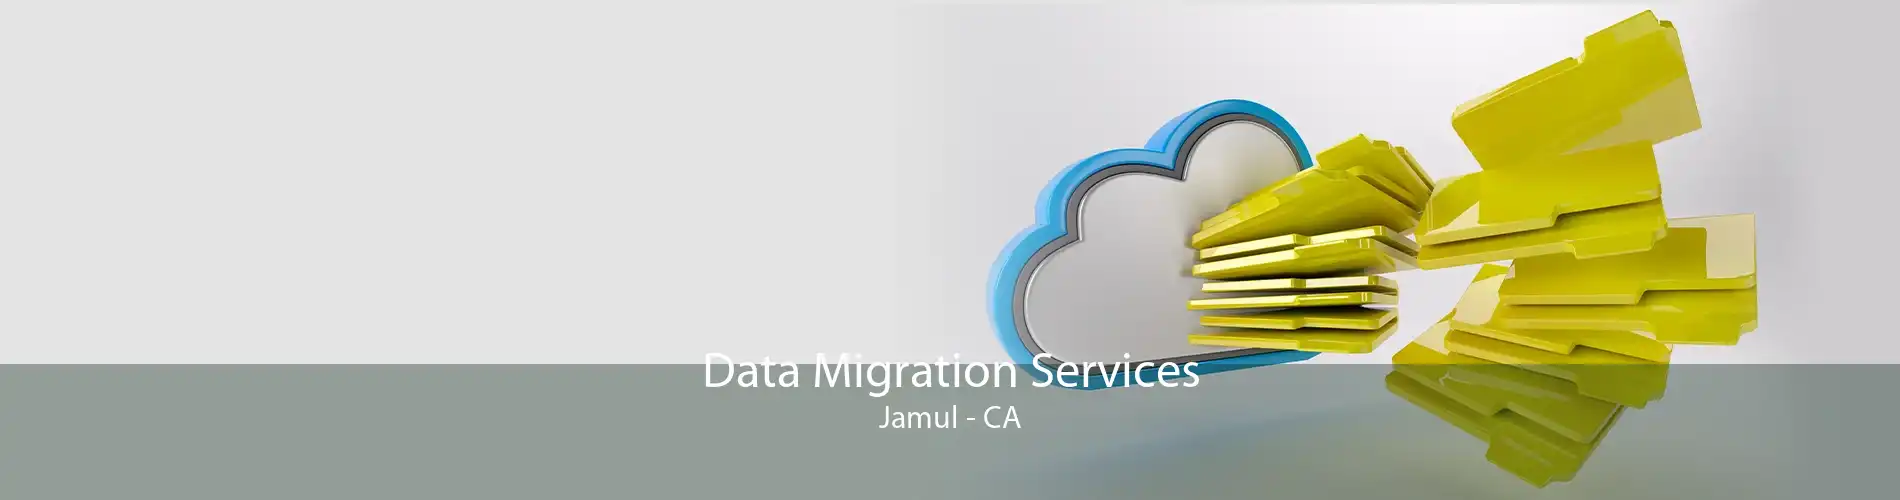 Data Migration Services Jamul - CA